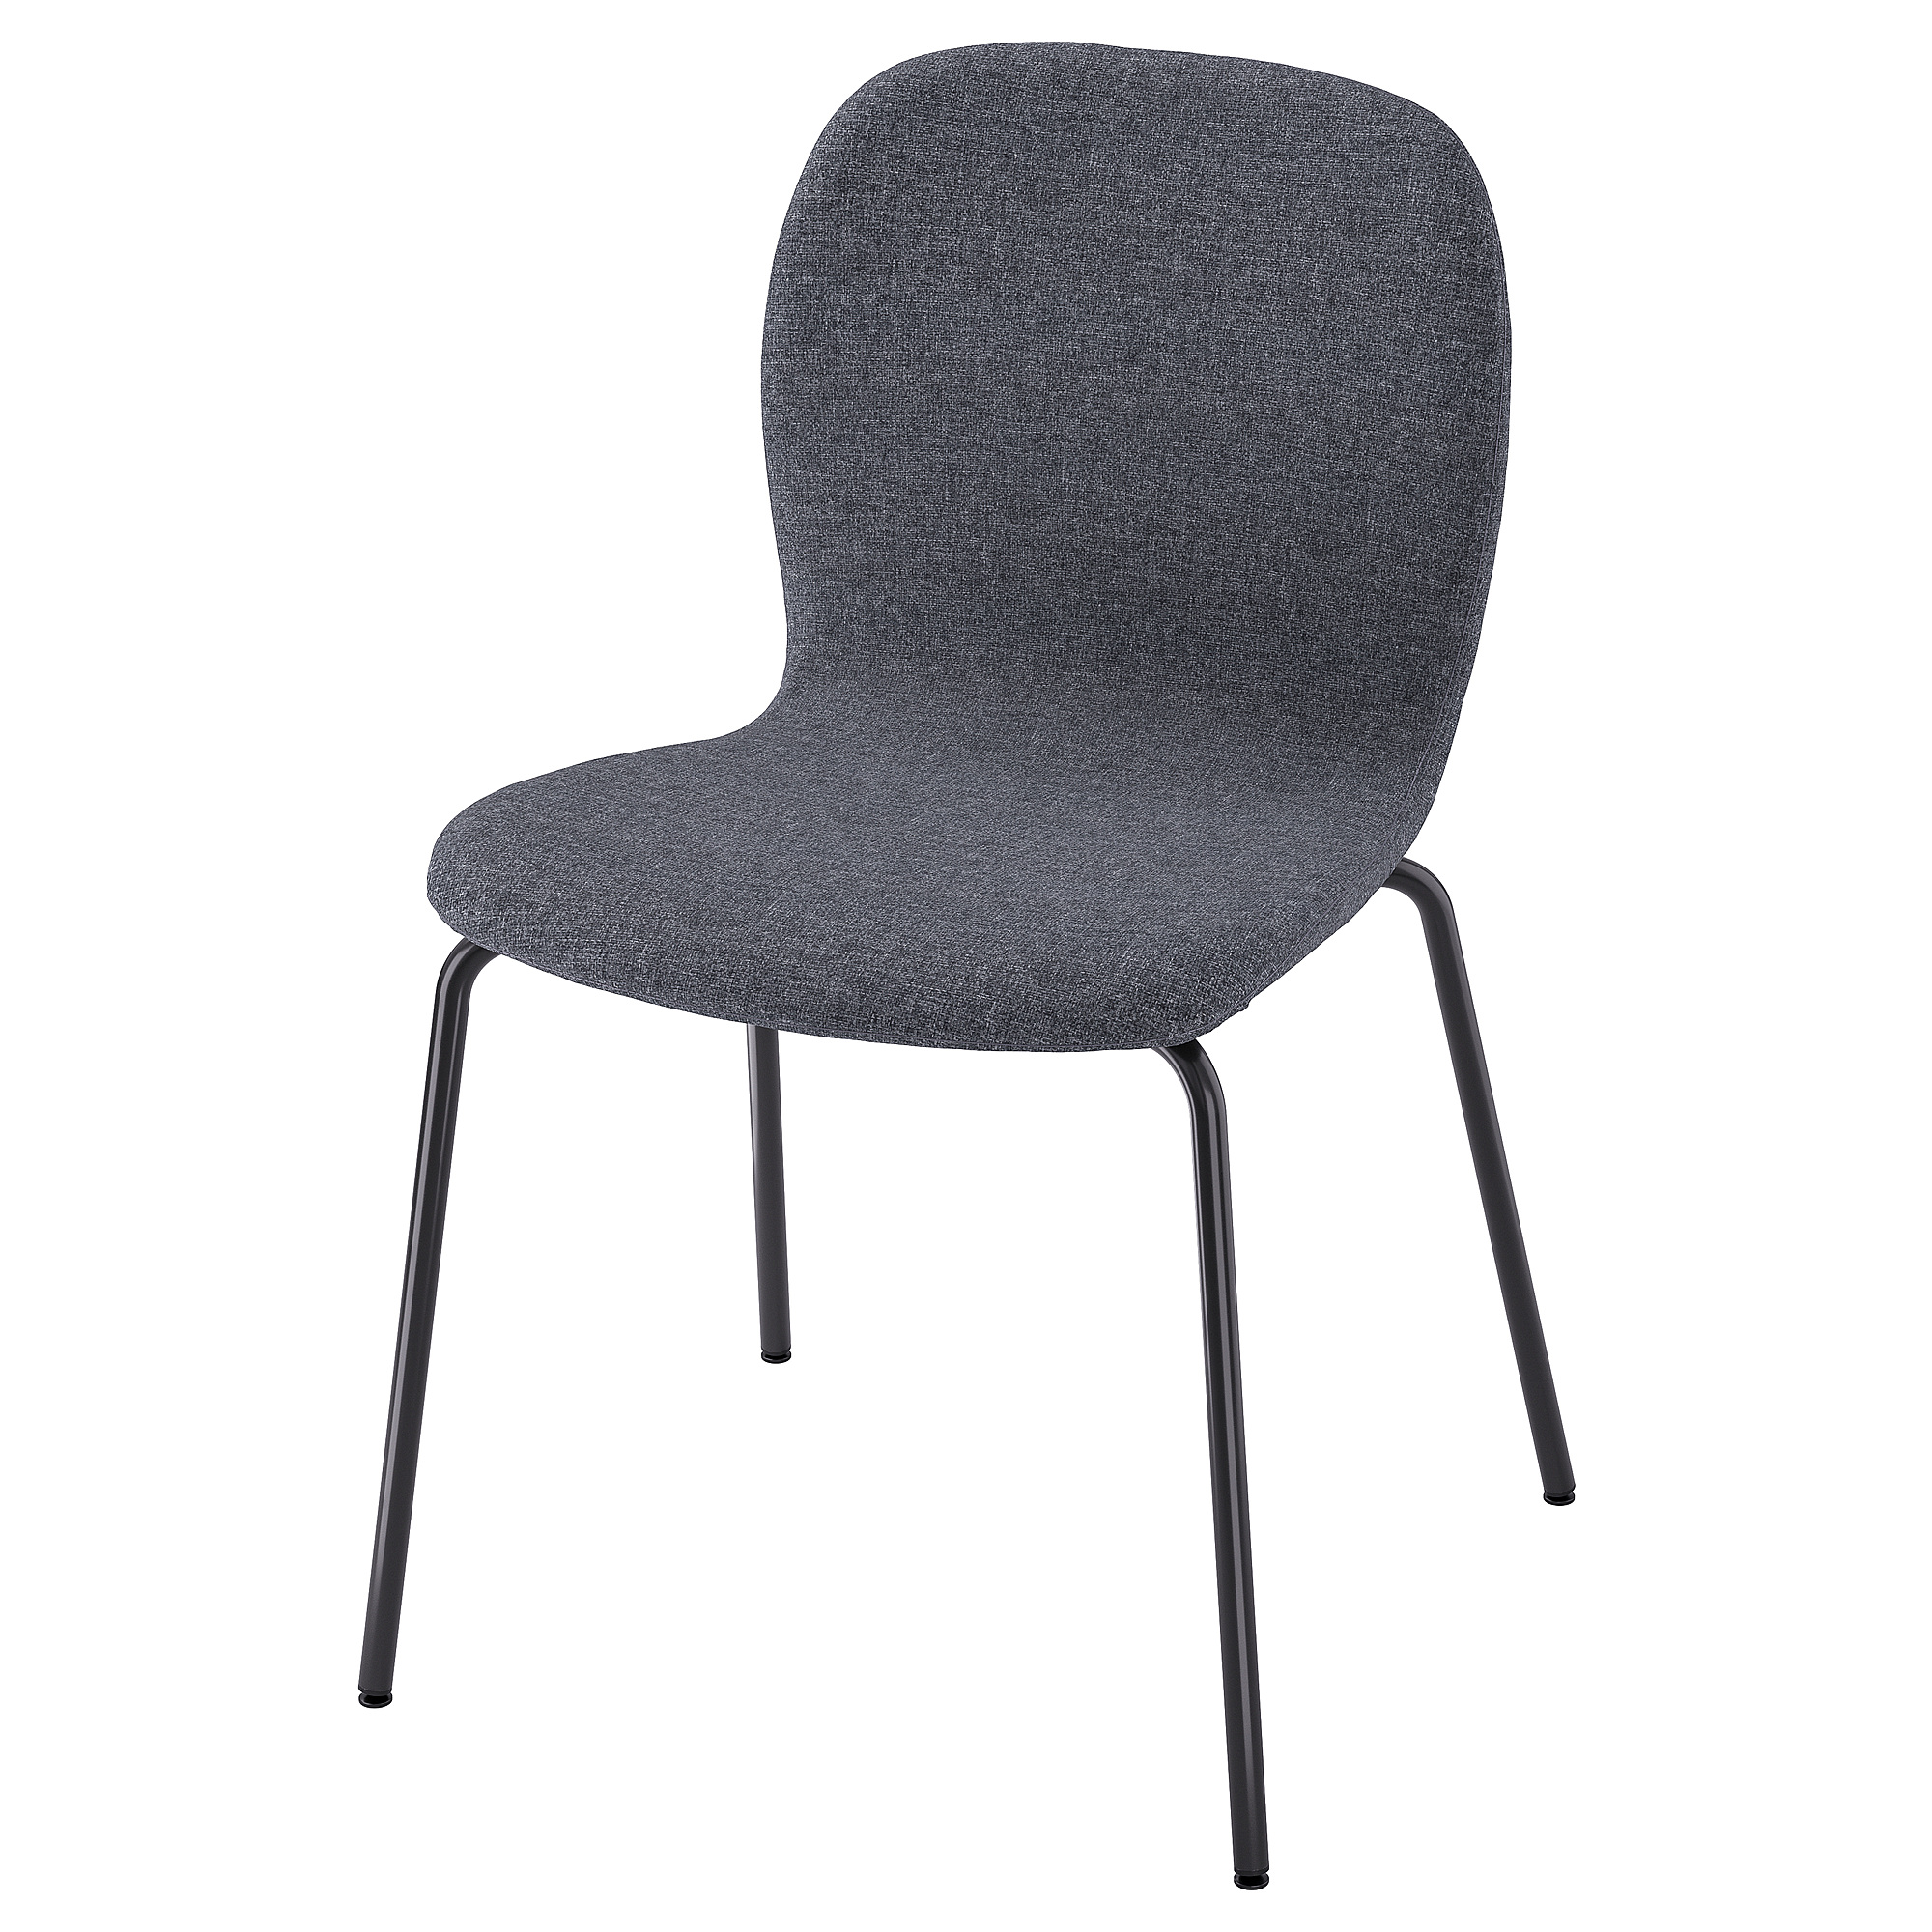 KARLPETTER - 椅子, Gunnared 暗灰色/Sefast 黑色| IKEA 香港及澳門